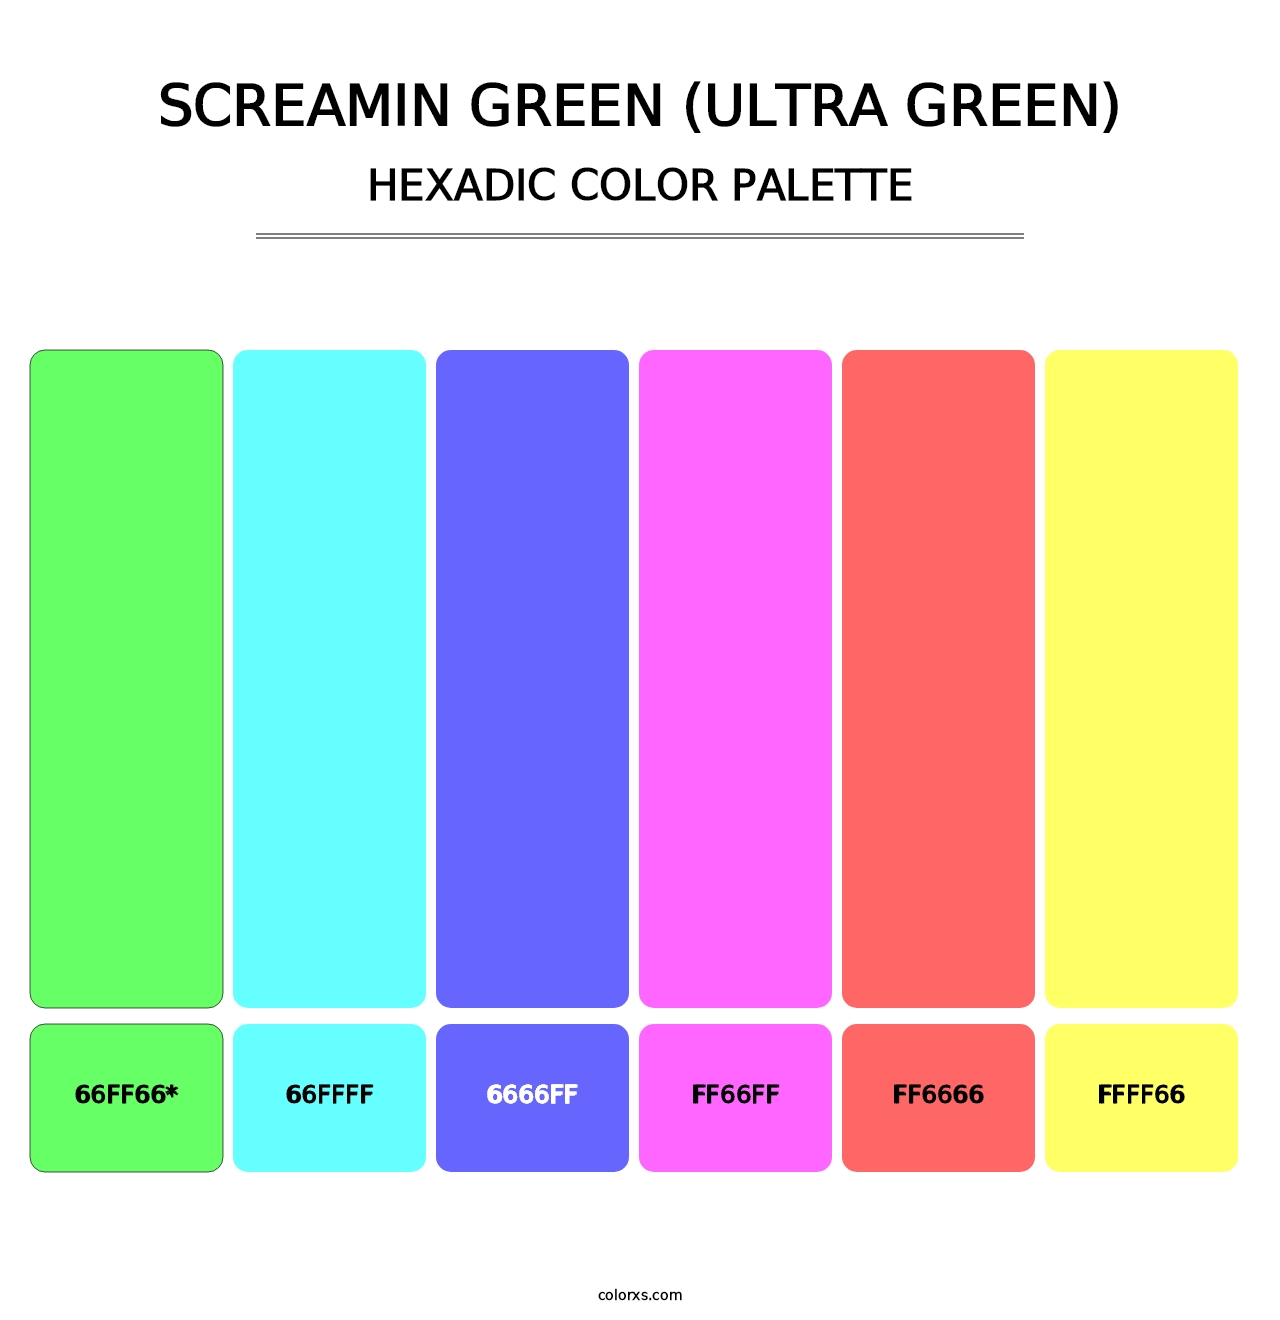 Screamin Green (Ultra Green) - Hexadic Color Palette